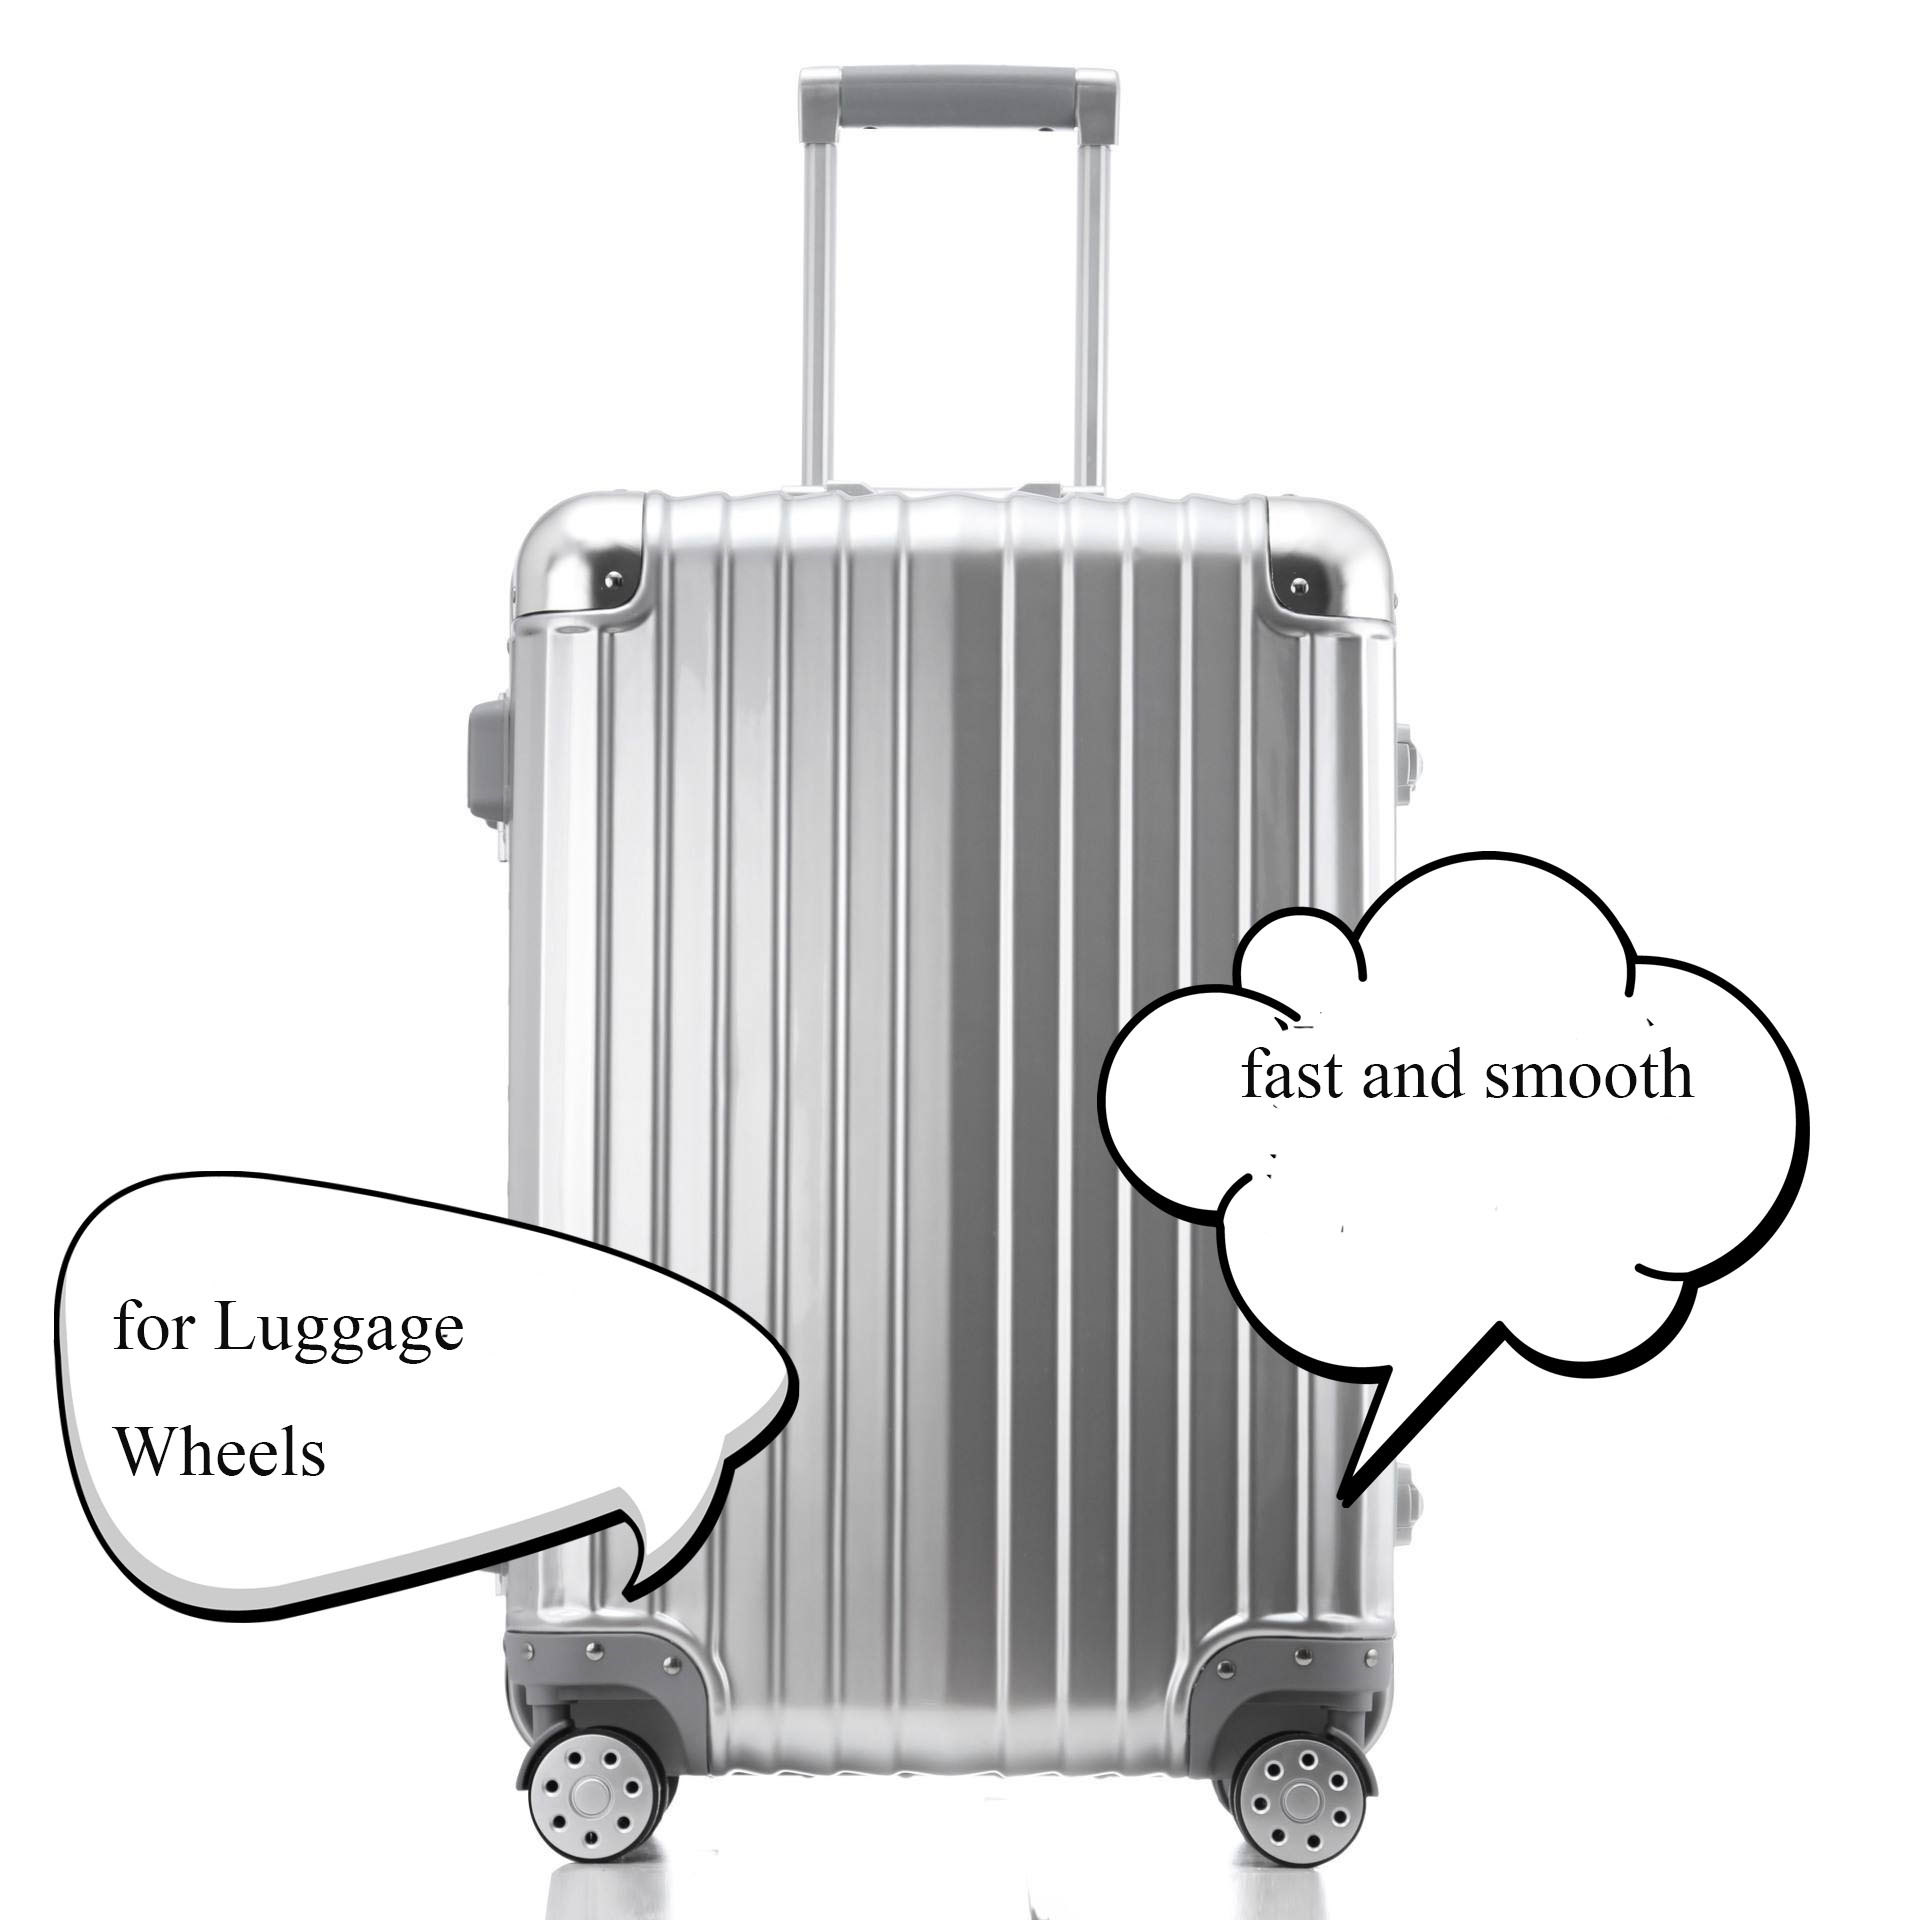  luggage wheel